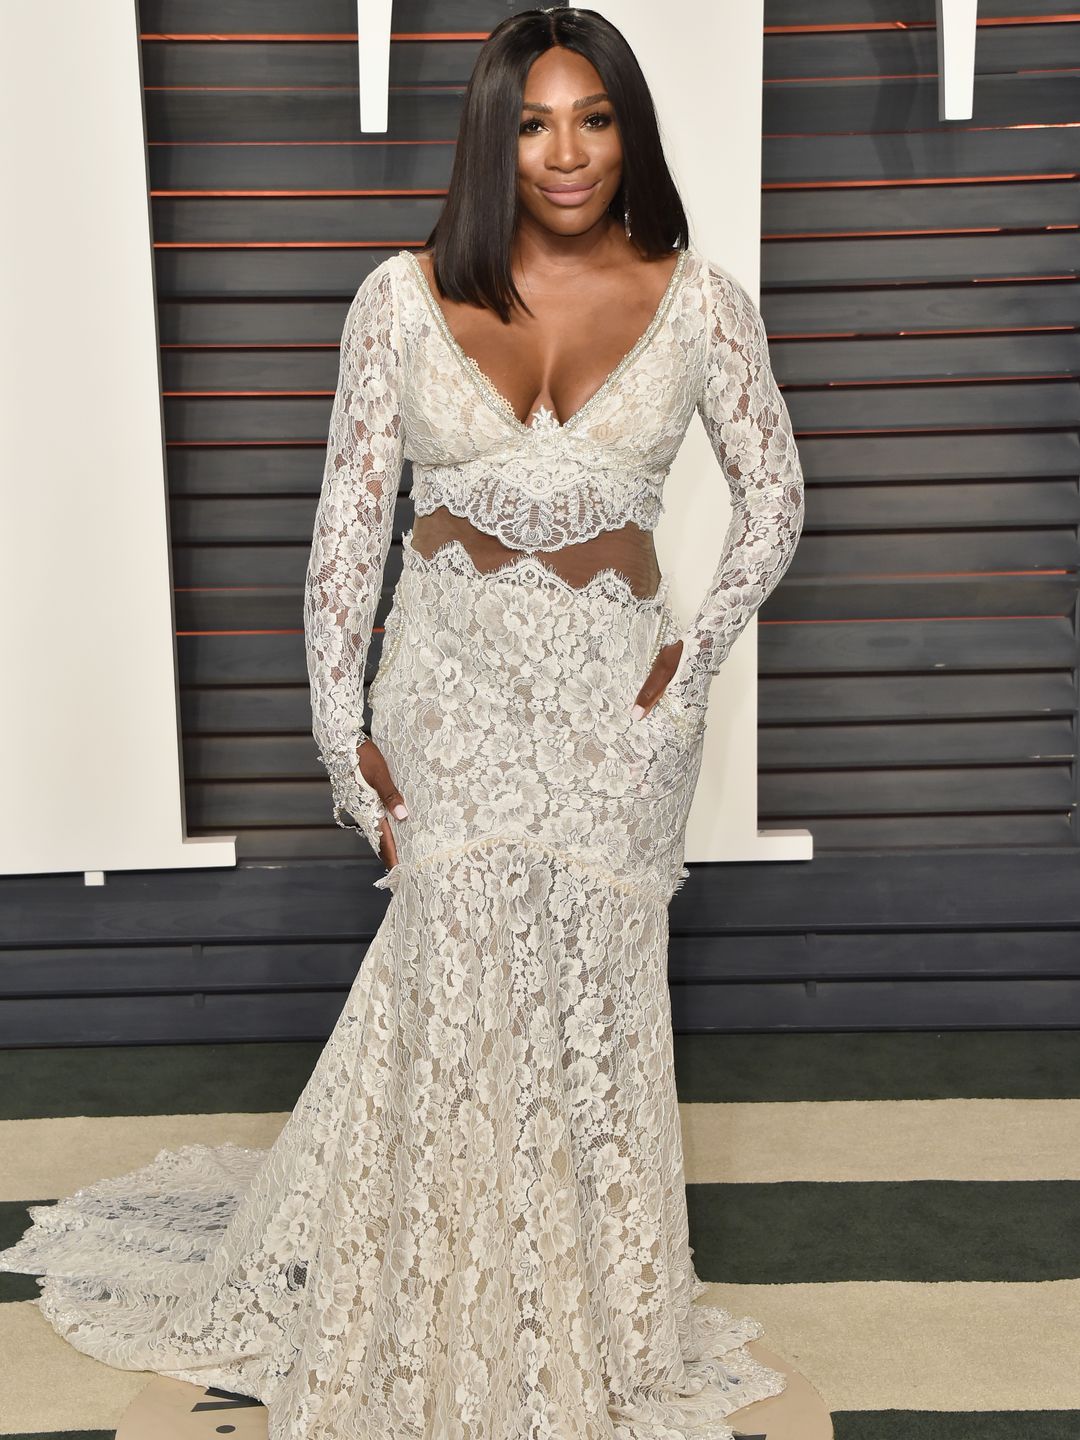 Serena Williams in a lace white dress